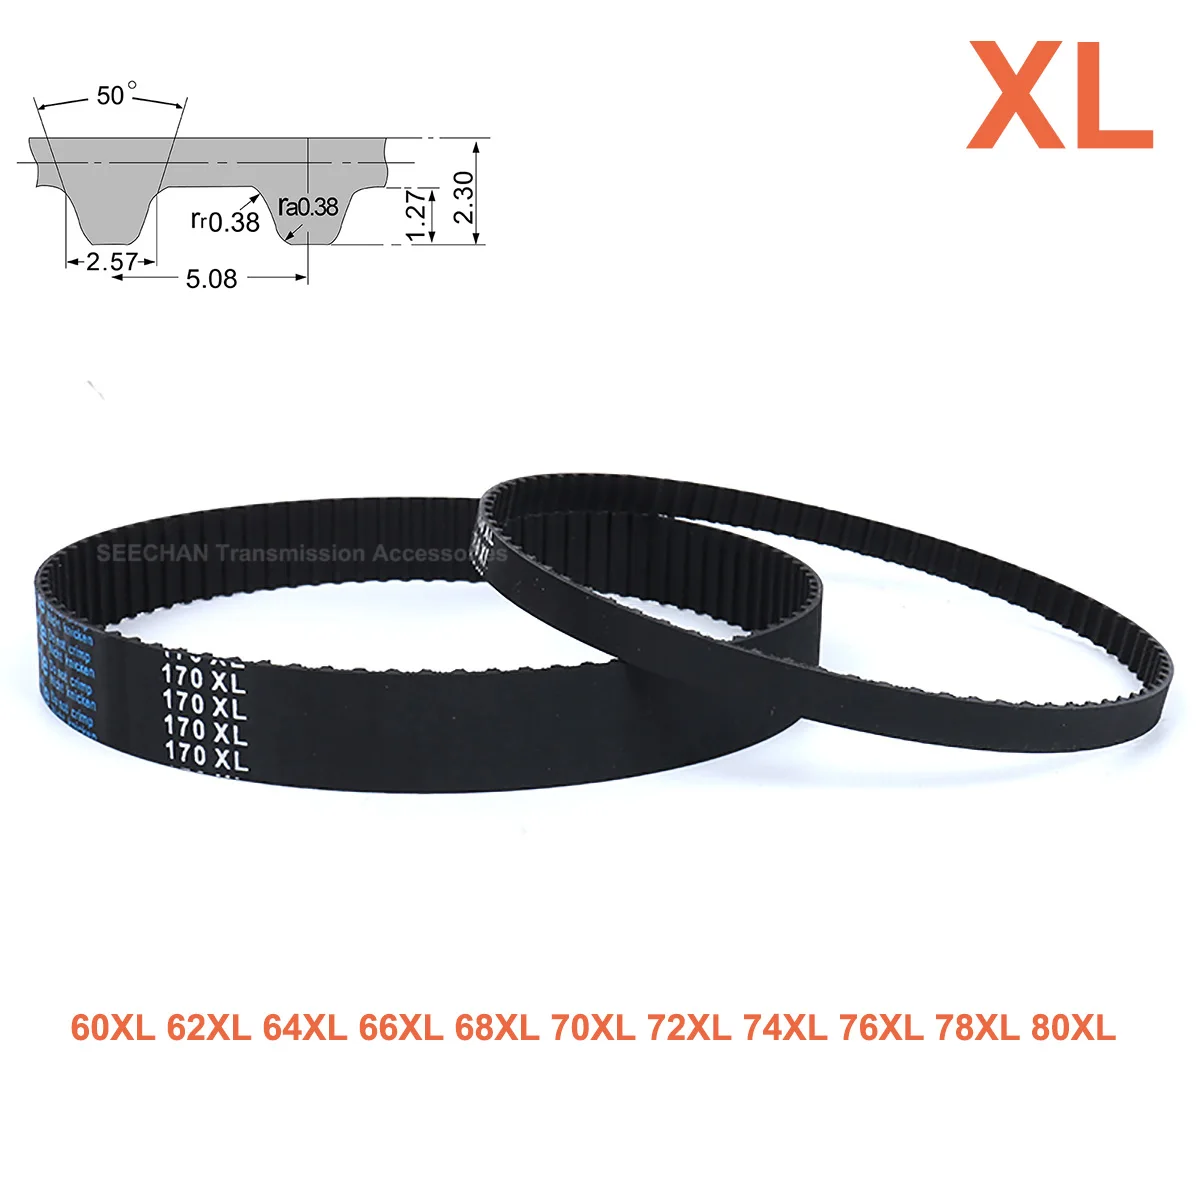 

1Pcs XL Rubber Timing Belt Width 10mm 12.7mm Closed Loop Synchronous Belt 60XL 62XL 64XL 66XL 68XL 70XL 72XL 74XL 76XL 78XL 80XL